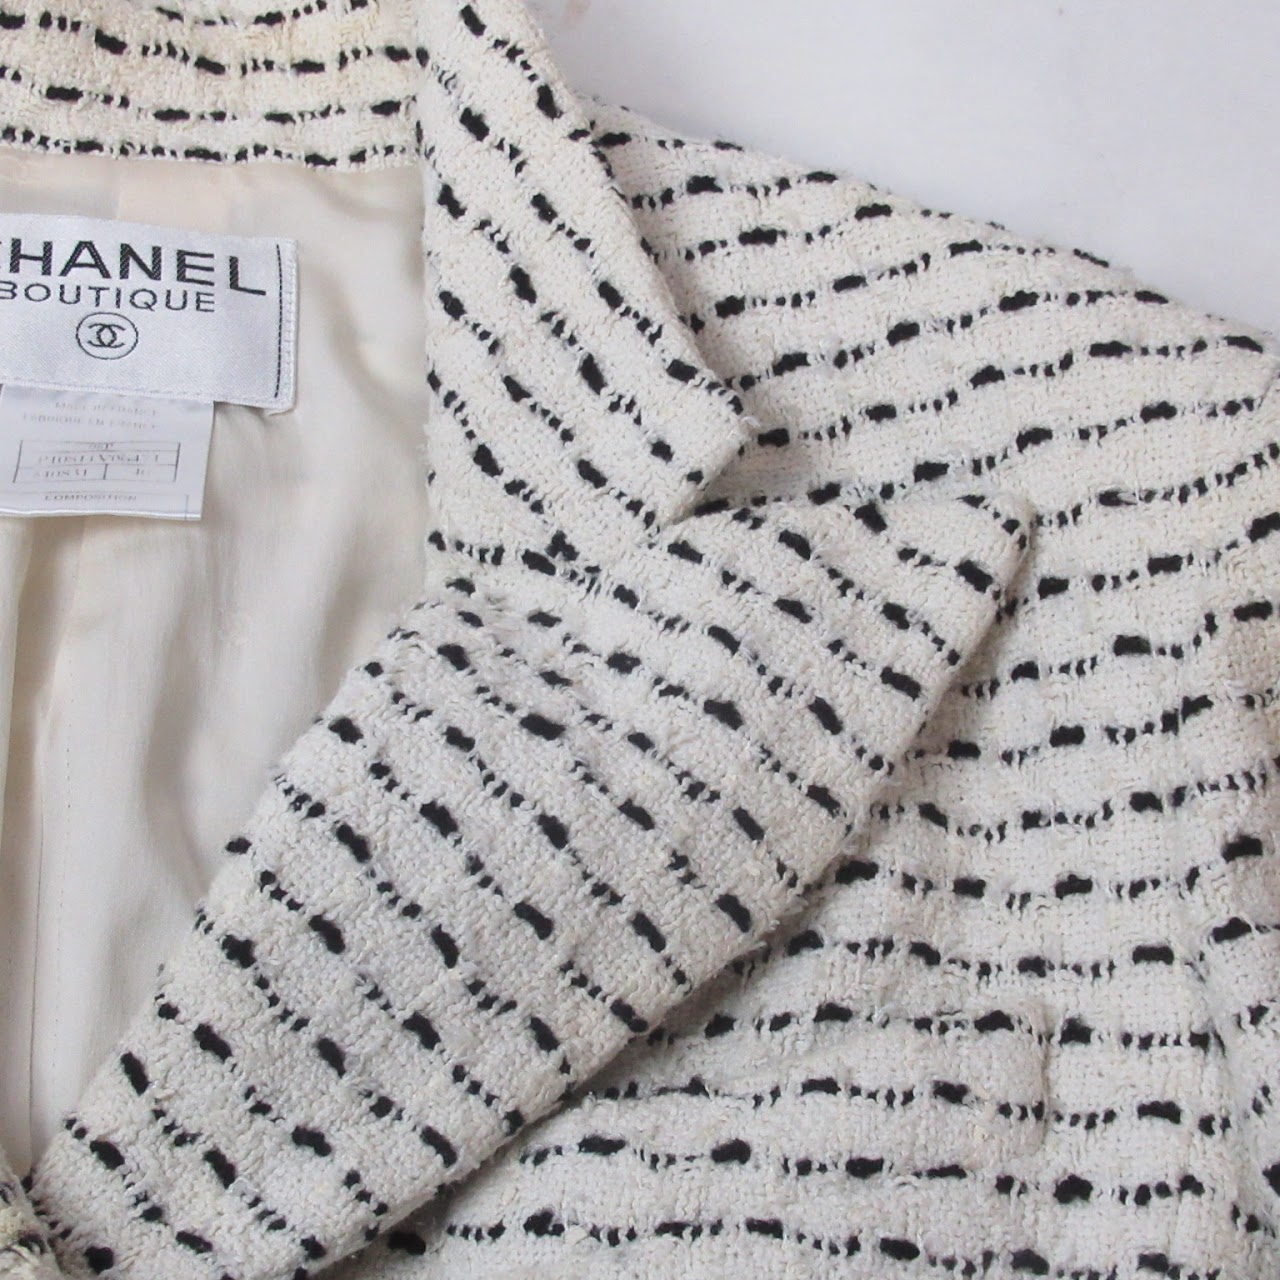 Chanel Boutique Dotted Striped Blazer